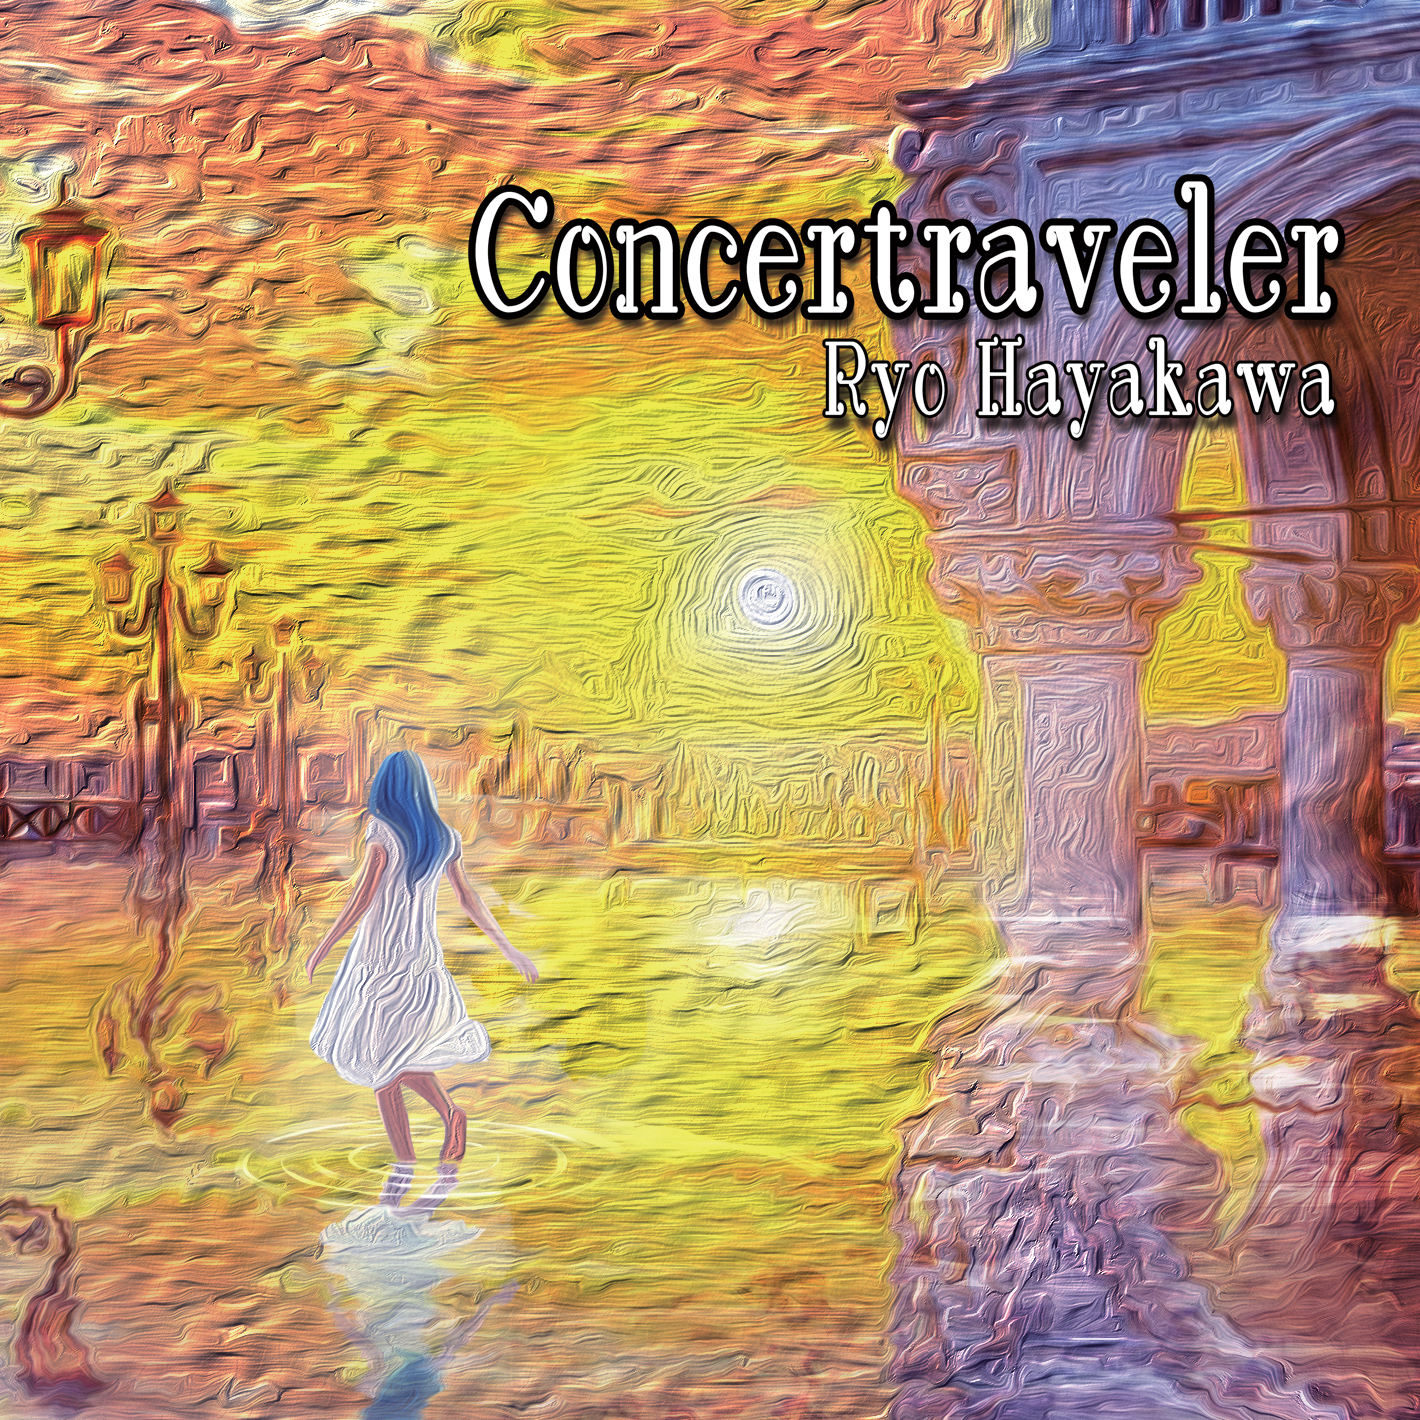 Concertraveler